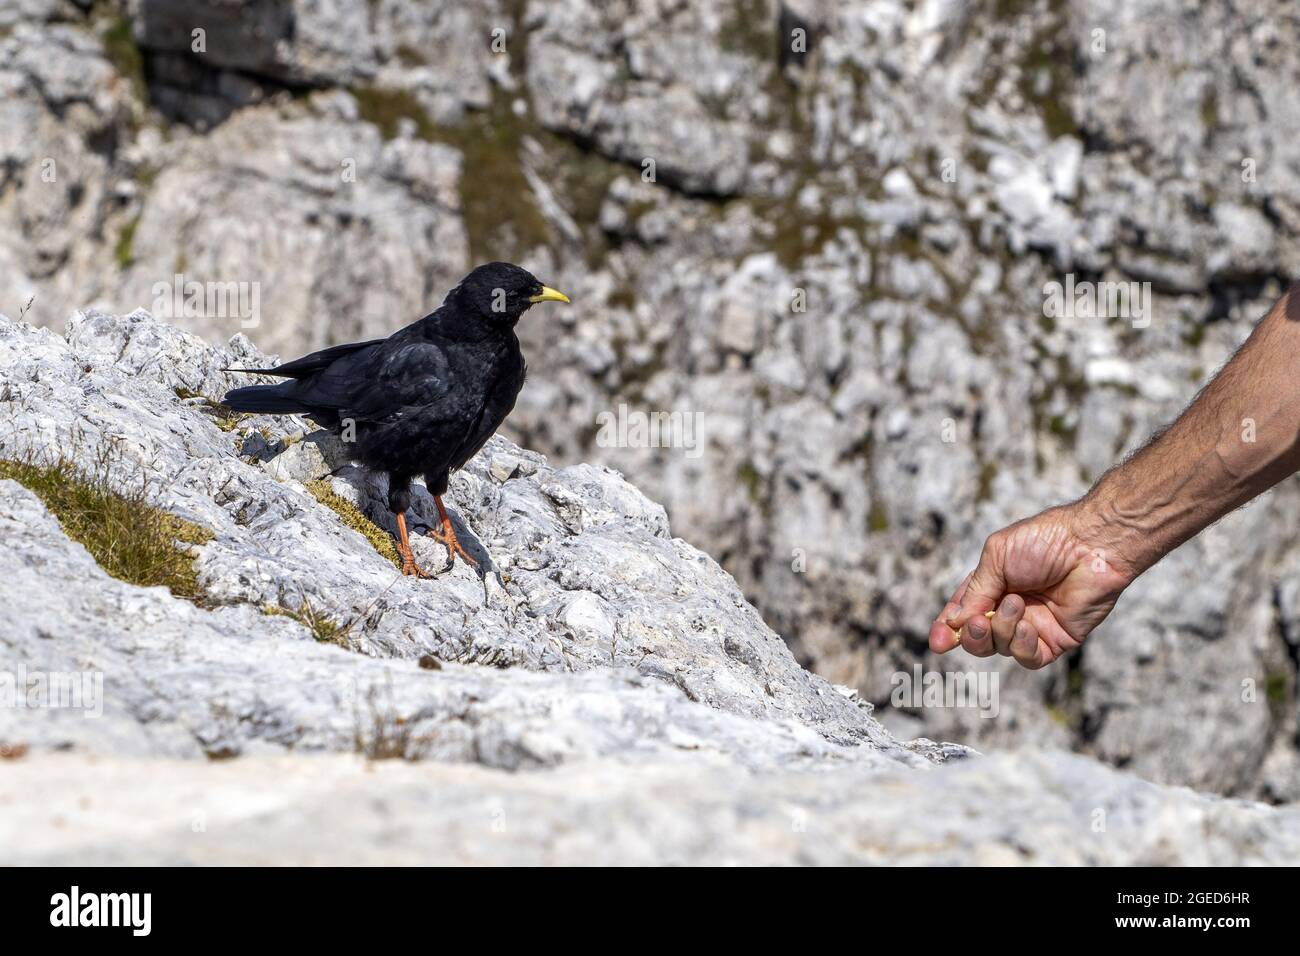 old man hand feeding a wild croak black bird in dolomites mountains background Stock Photo